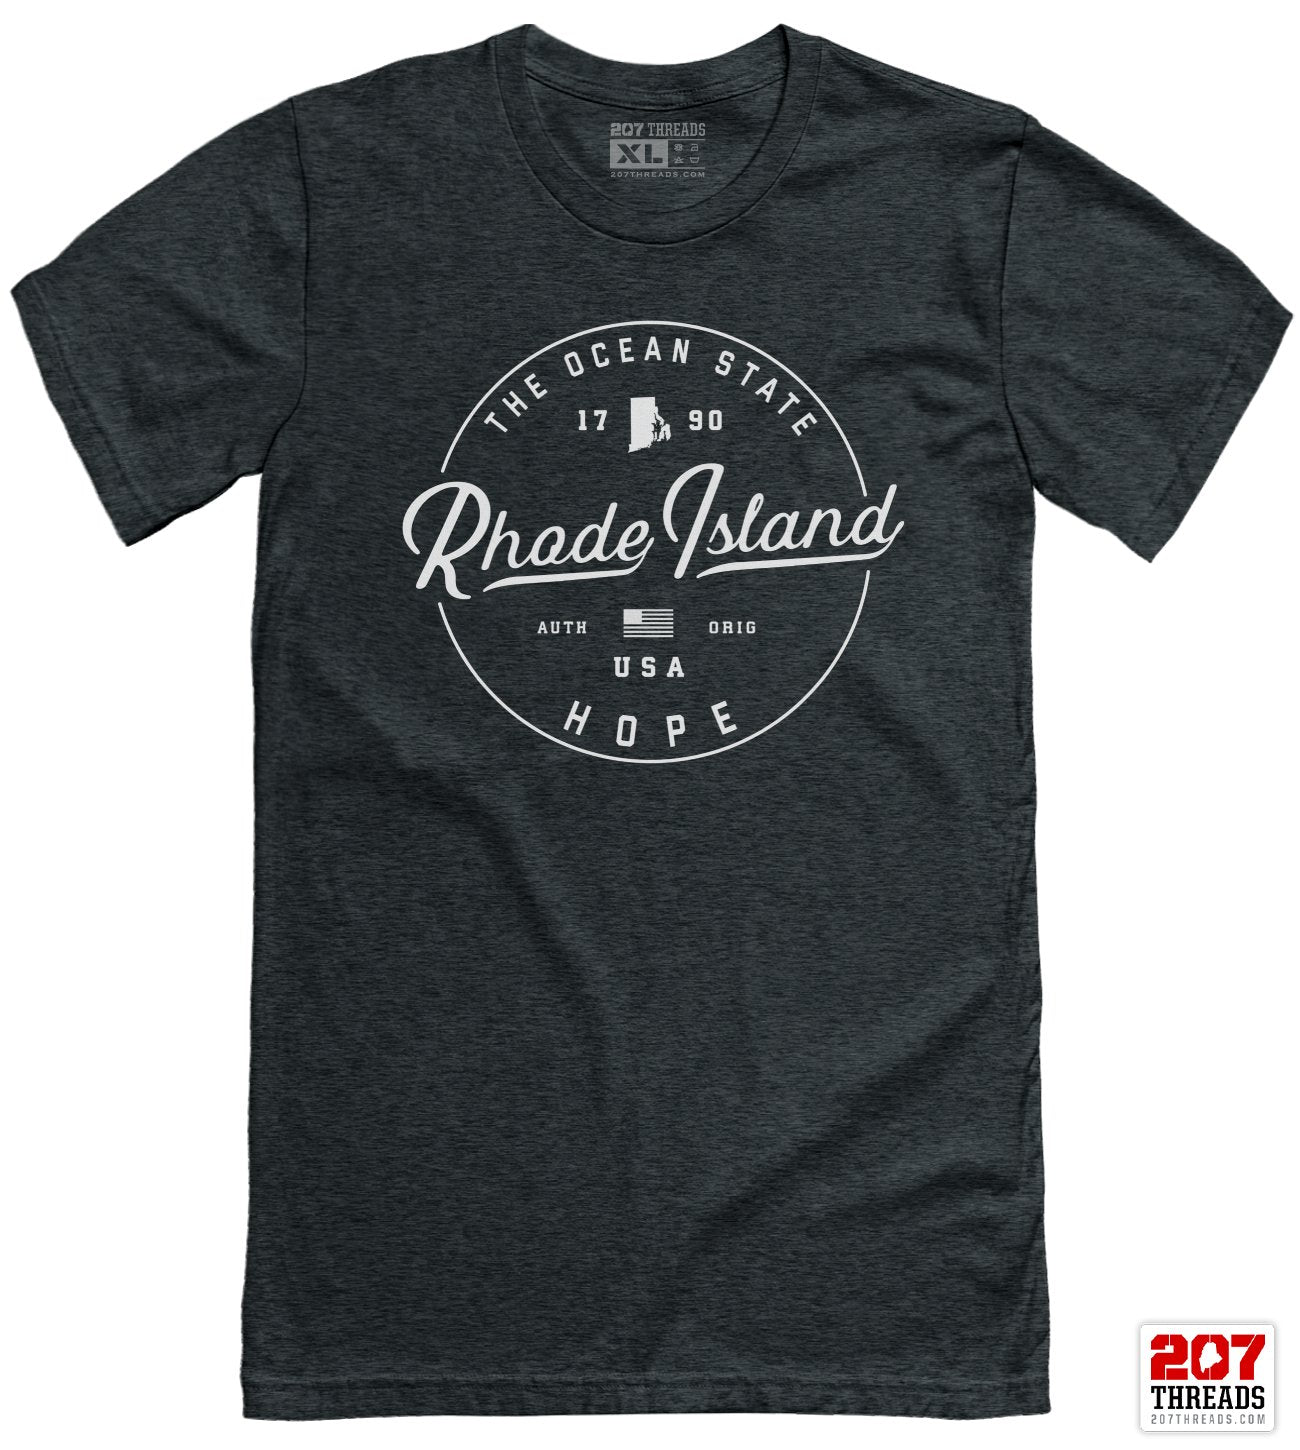 State of Rhode Island T-Shirt - Soft Rhode Island Vacation Tee